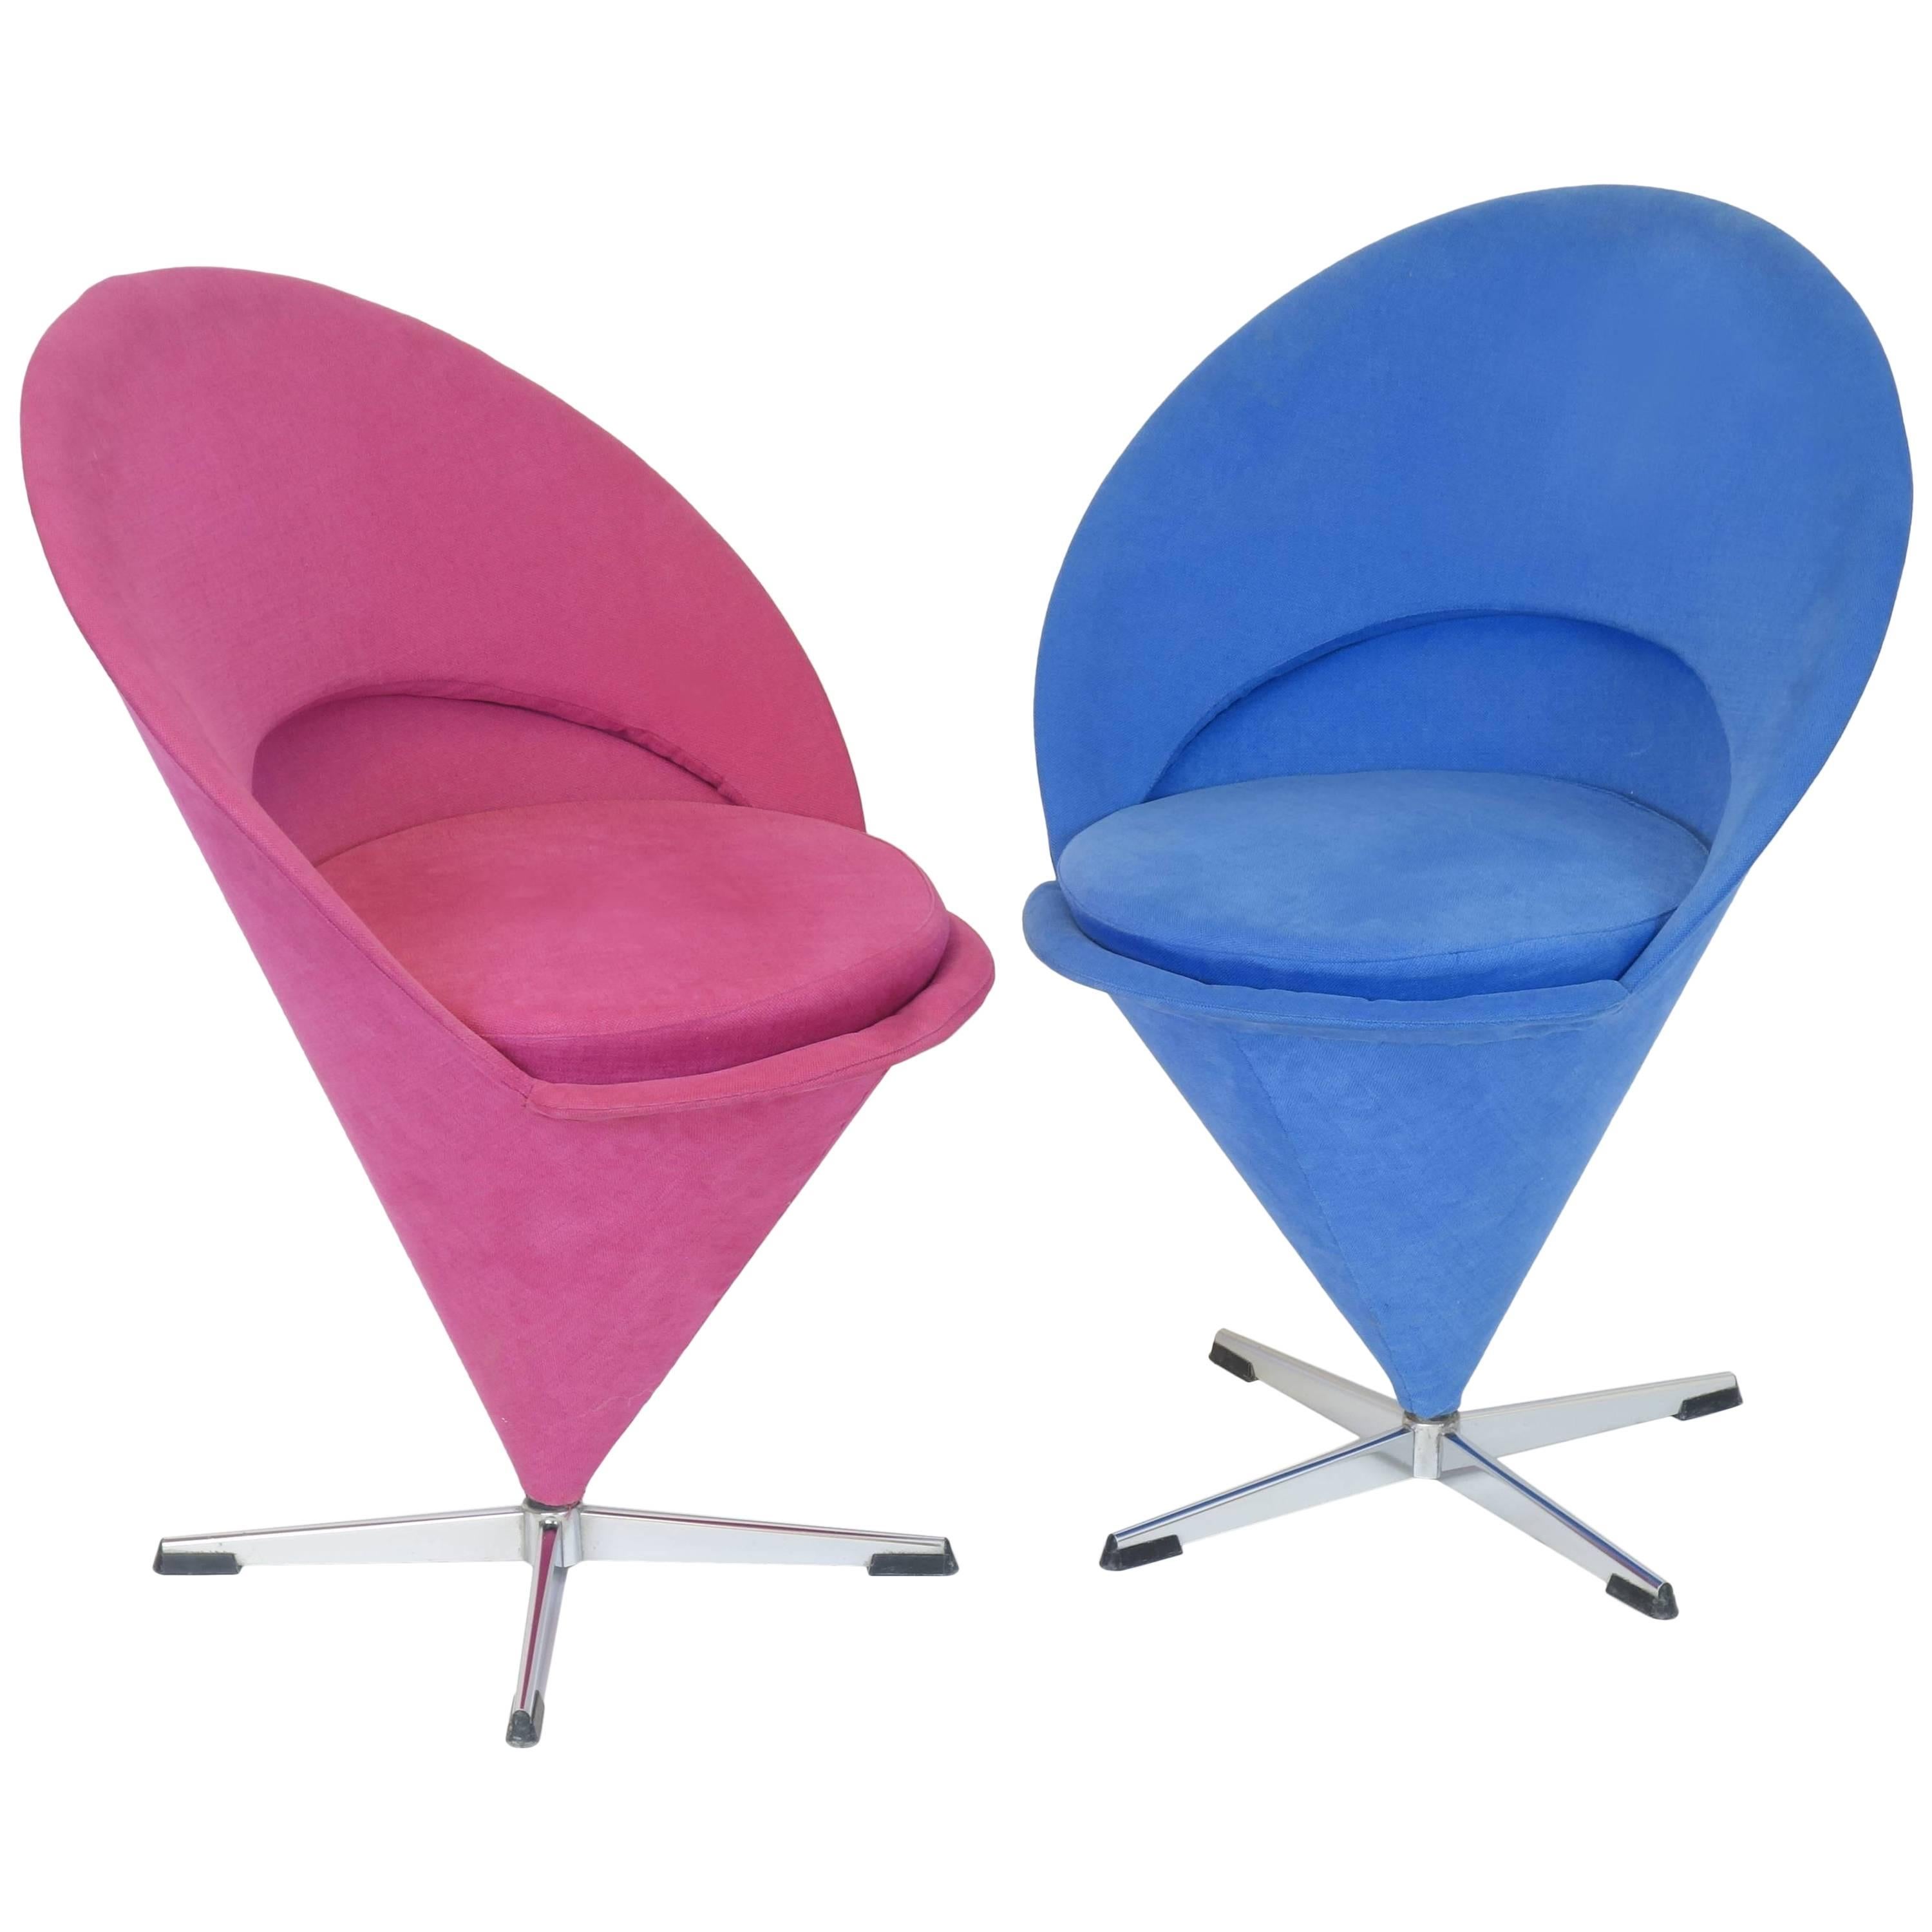 Verner Panton Design Pair of Cone Chairs Vitra Blue Red Denmark Original Nehl For Sale